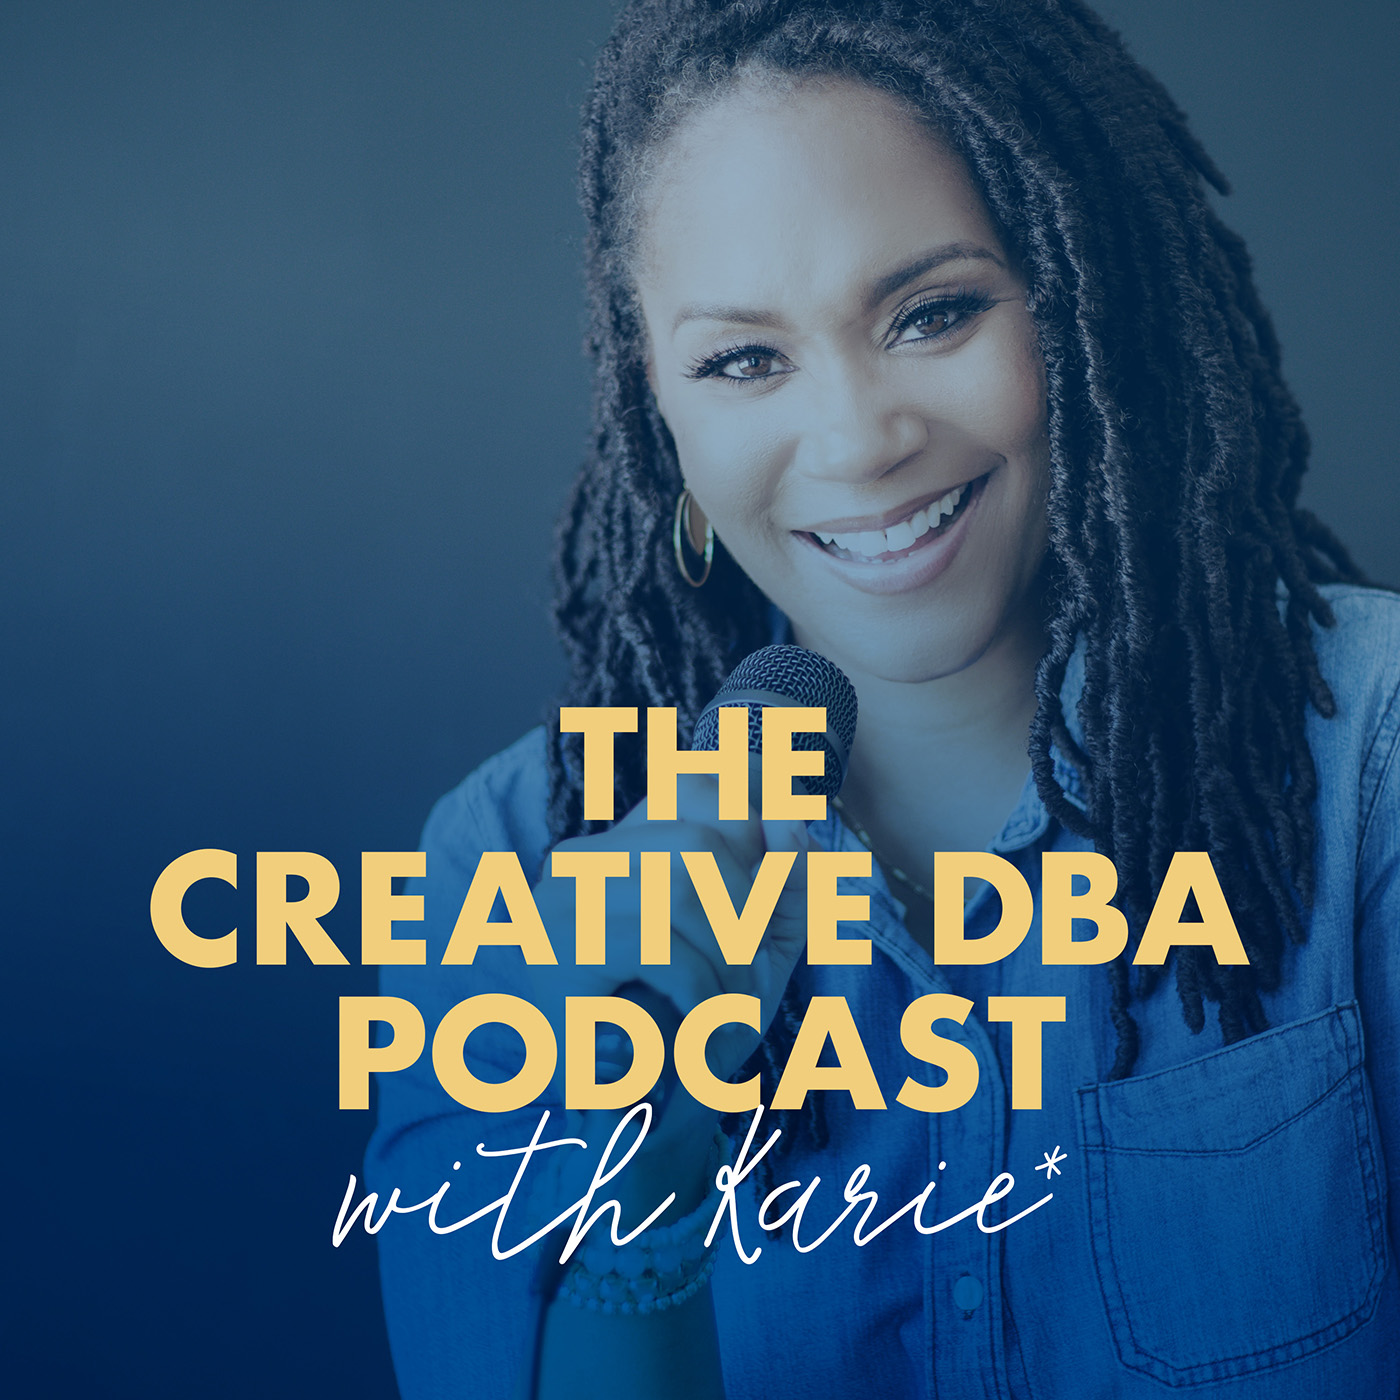 The Creative DBA Podcast